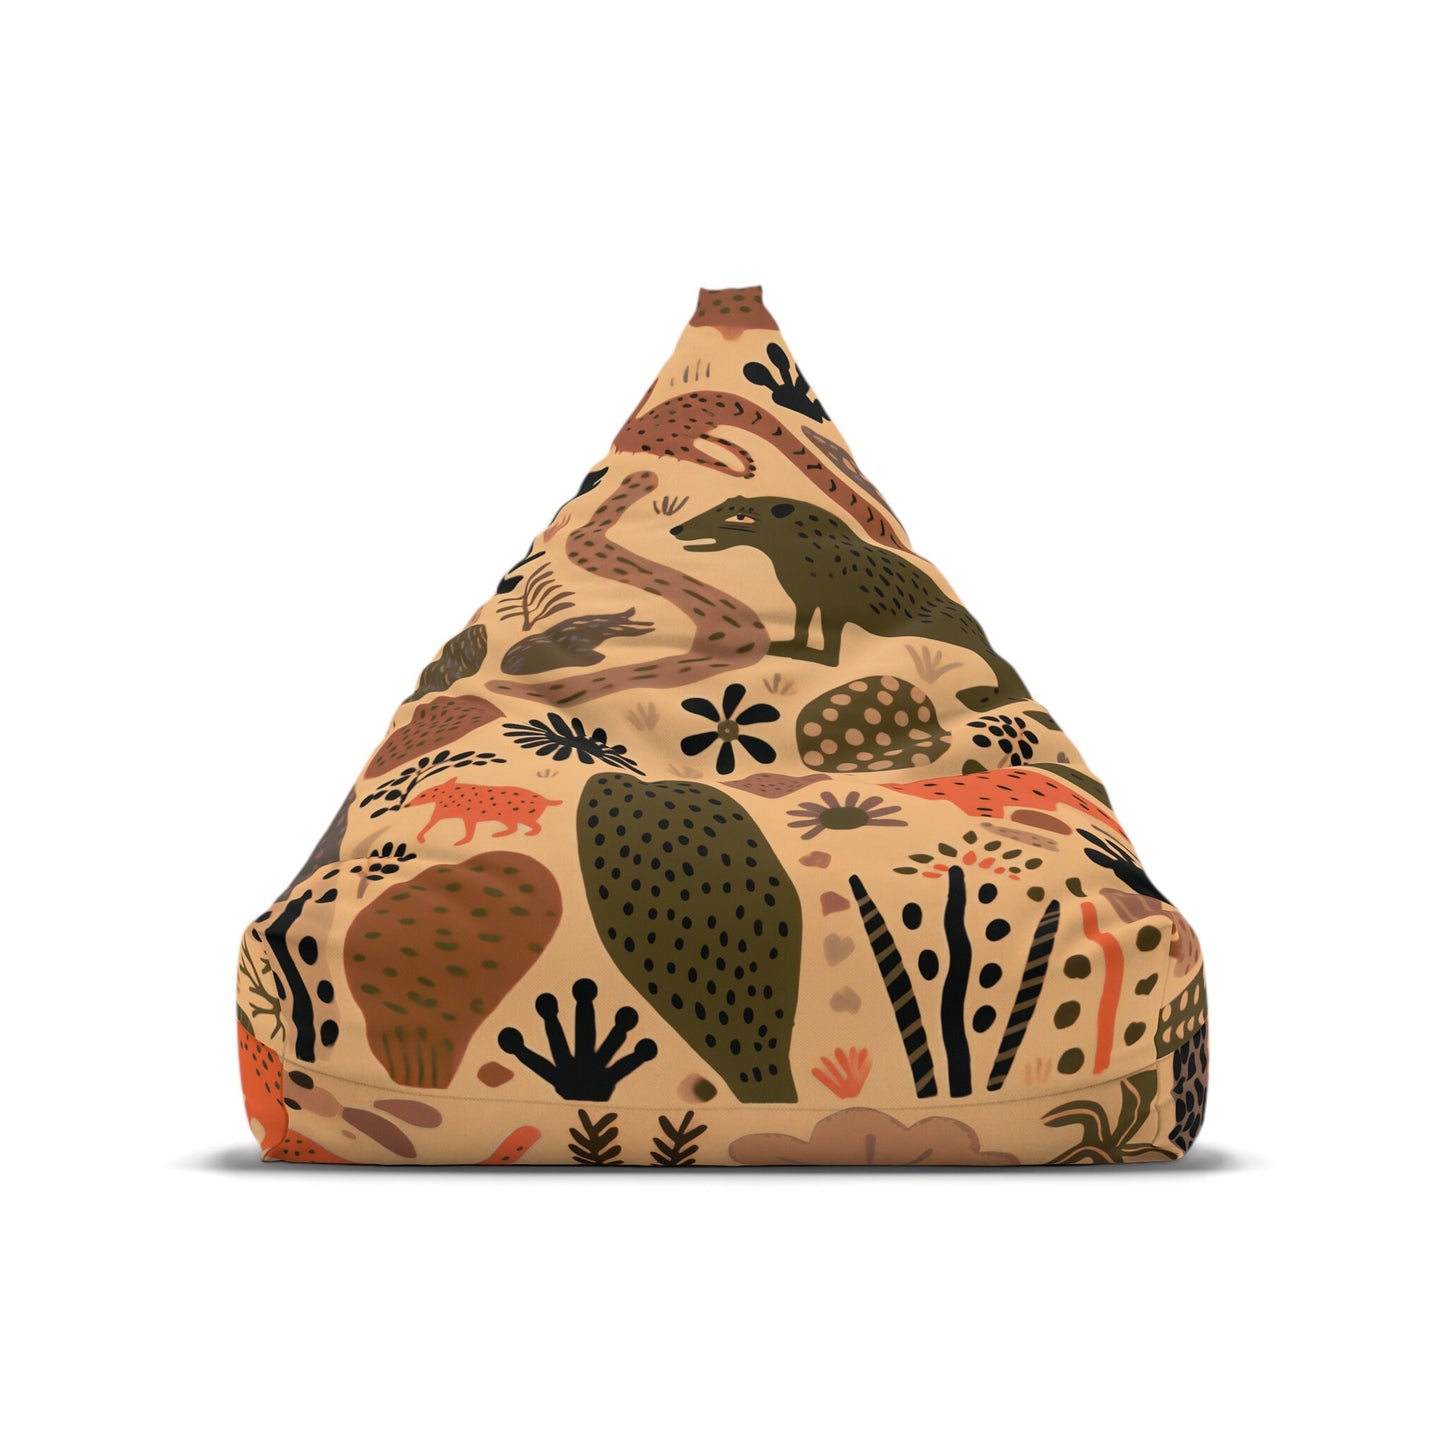 Creature Brown Bean Bag • Comfort Bean Bag • Durable Polyester Cover • Versatile Indoor Seating Option